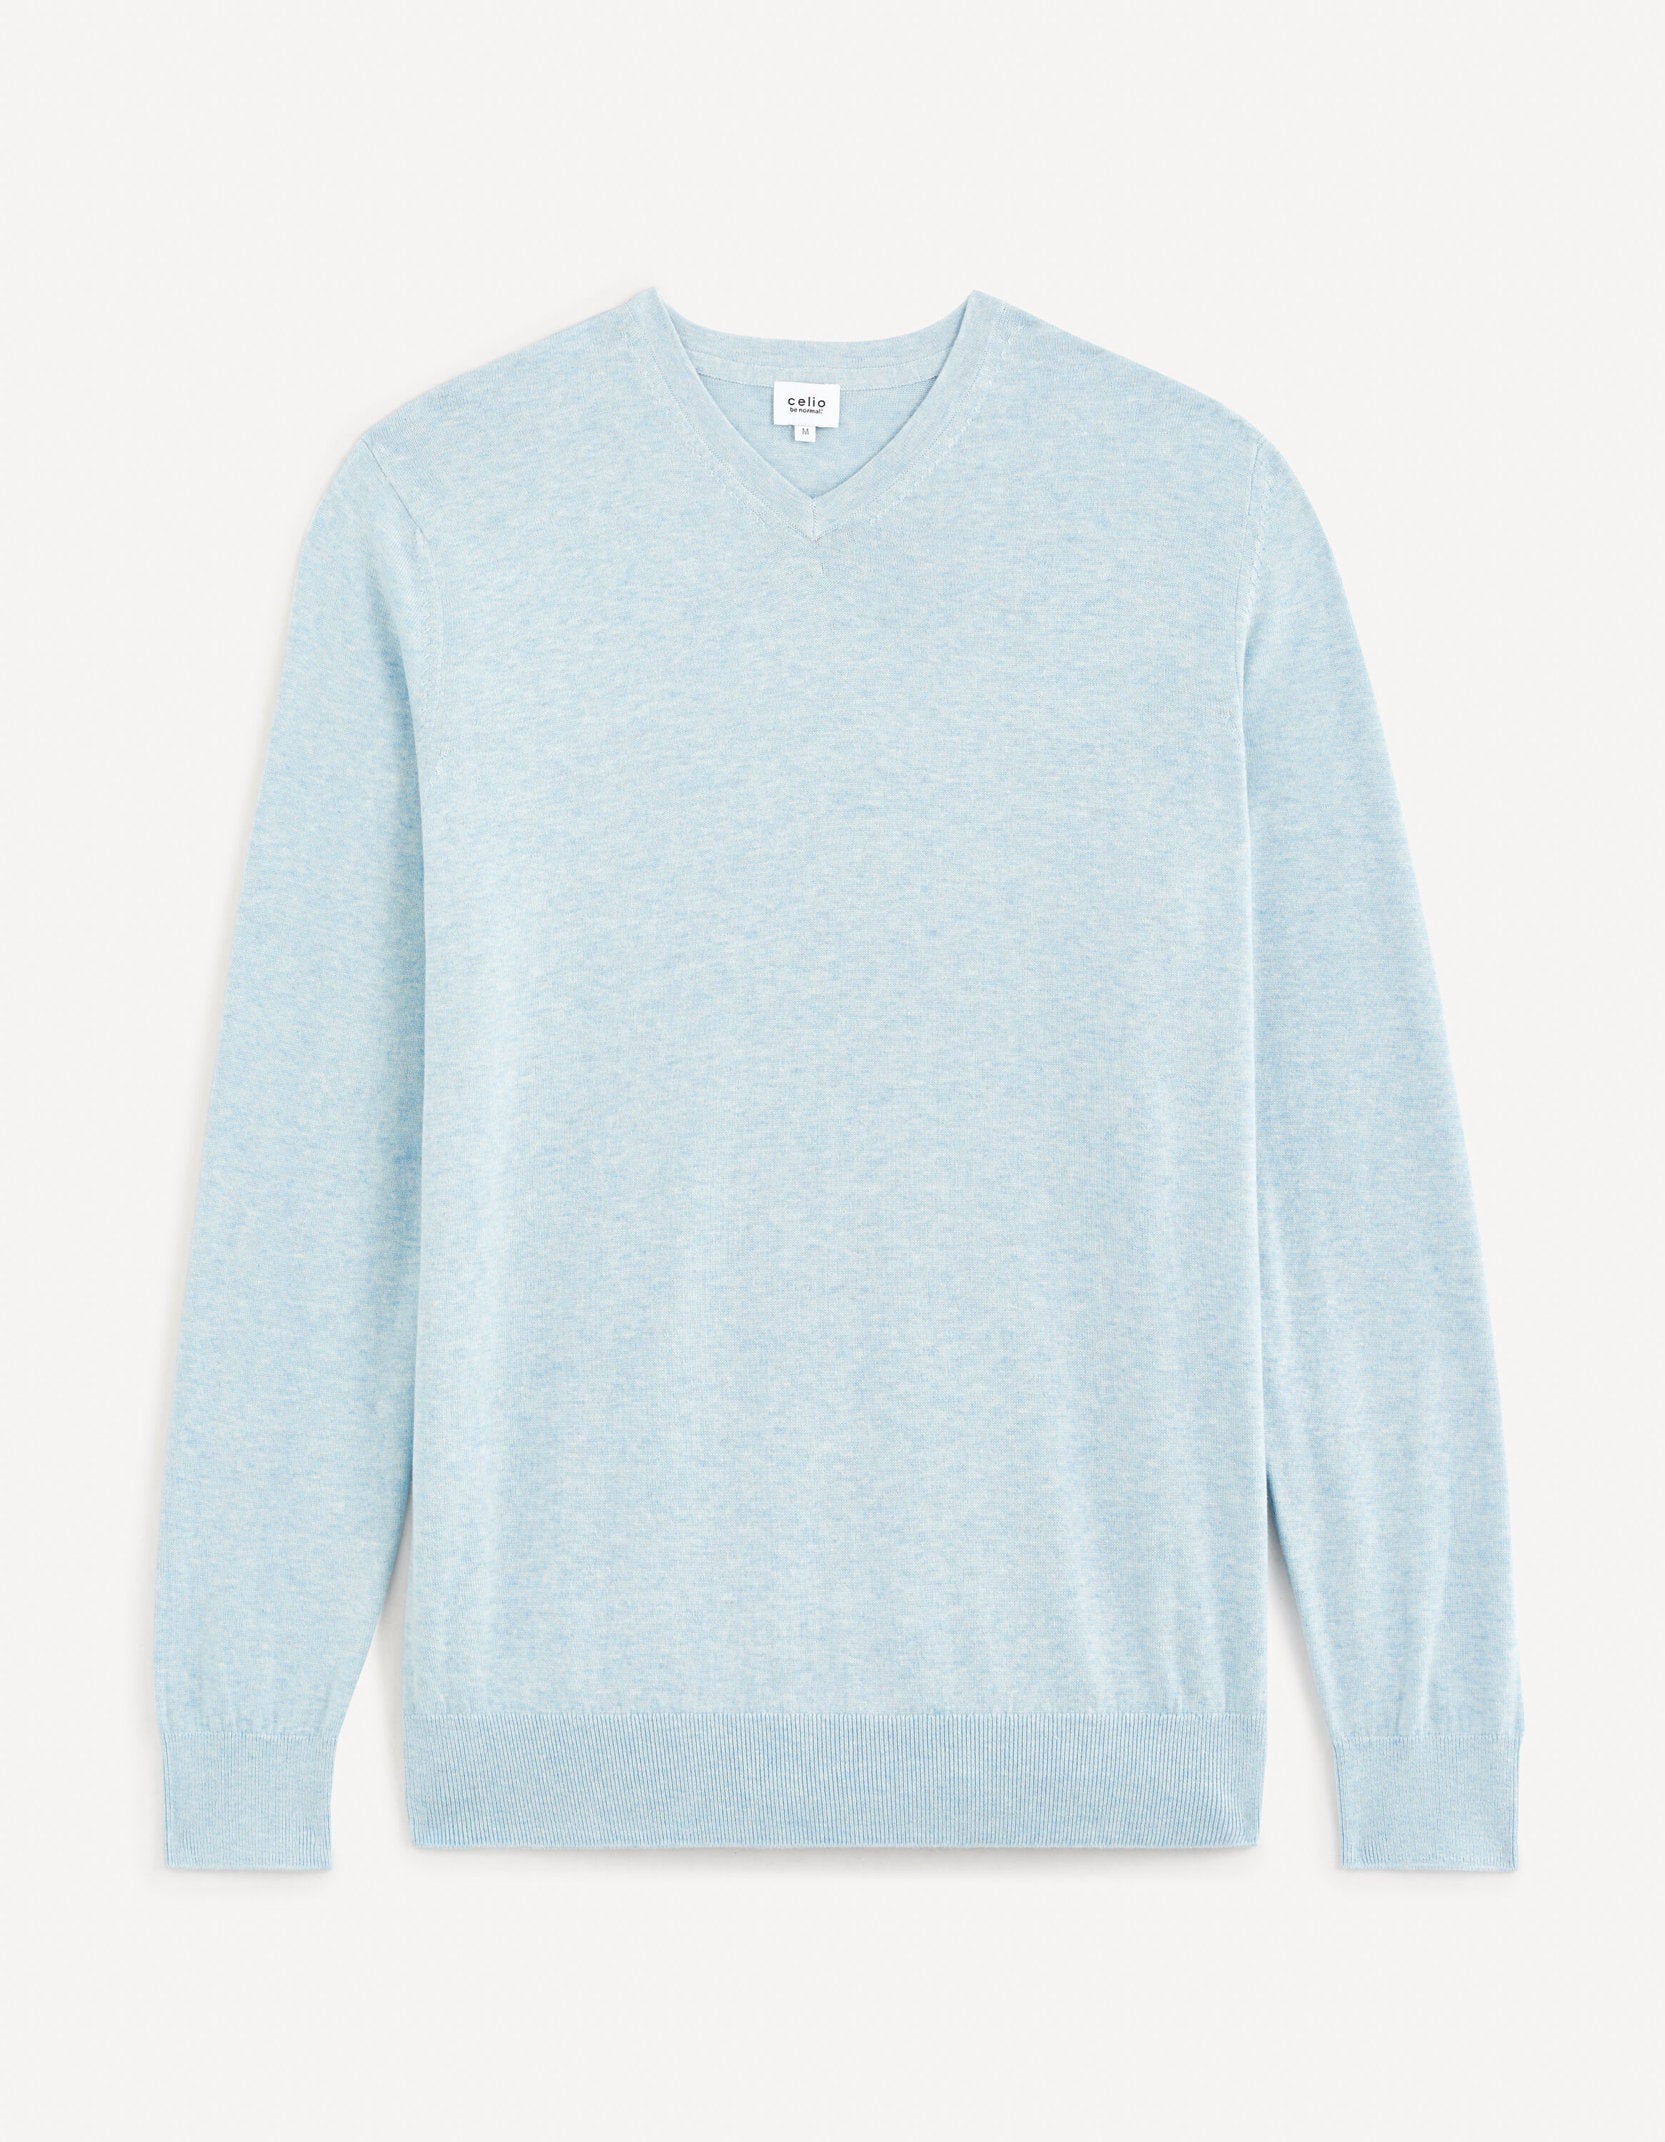 100% Cotton V-Neck Sweater - Light Blue_DECOTON_BLUE MEL_02